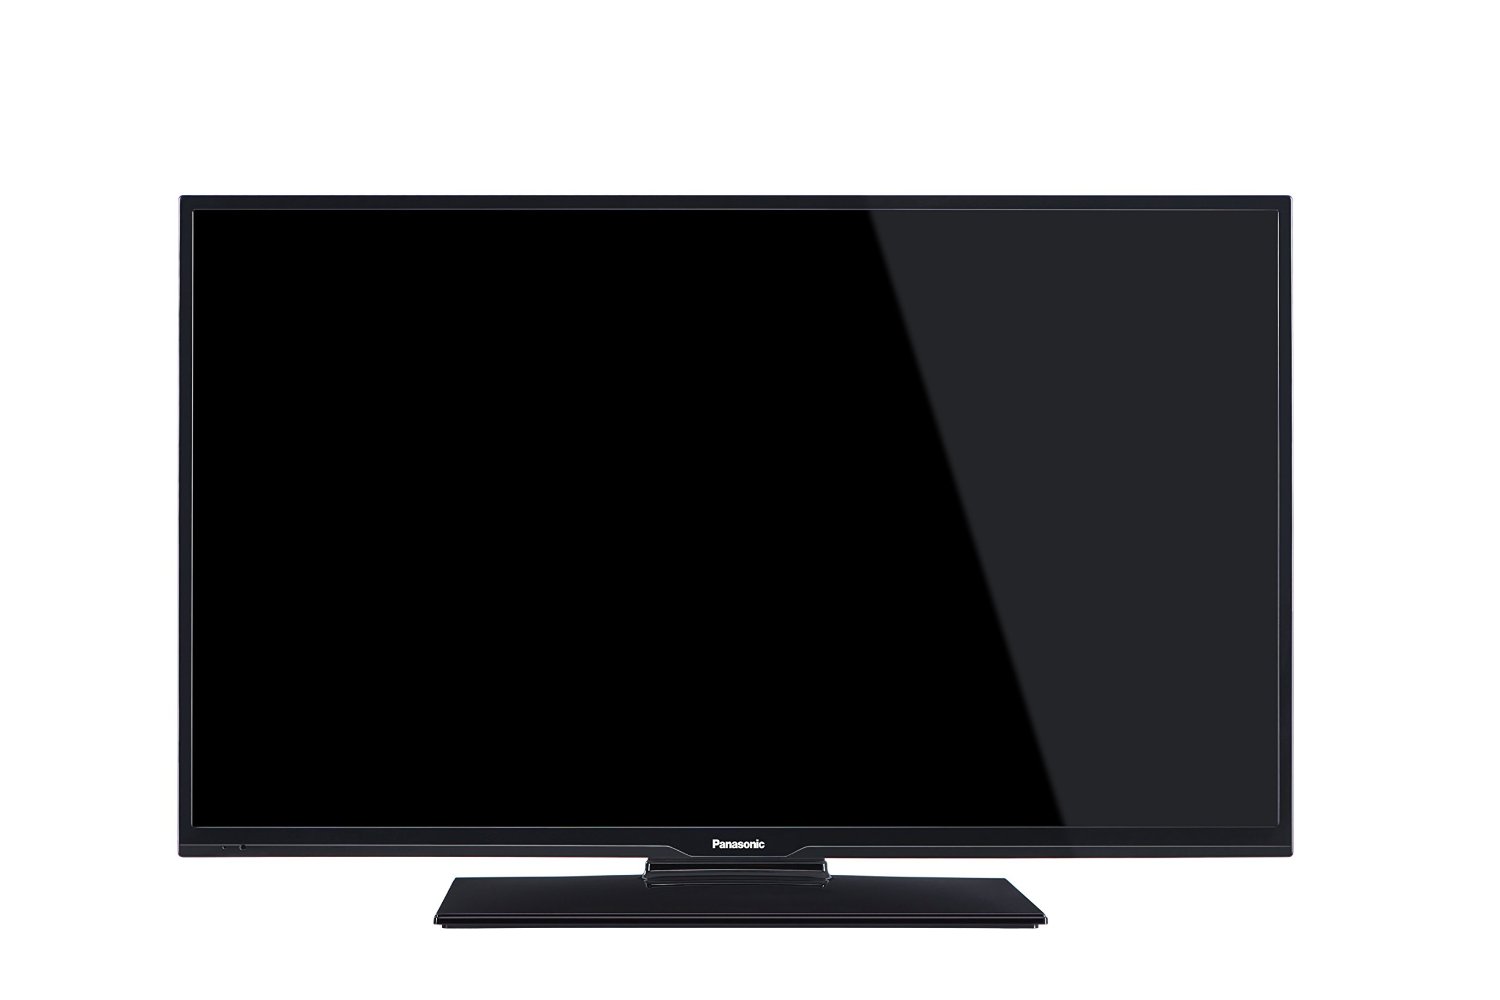 Panasonic TX-40C300B 40 inch Full HD LED 1080p TV with Freeview HD - Black